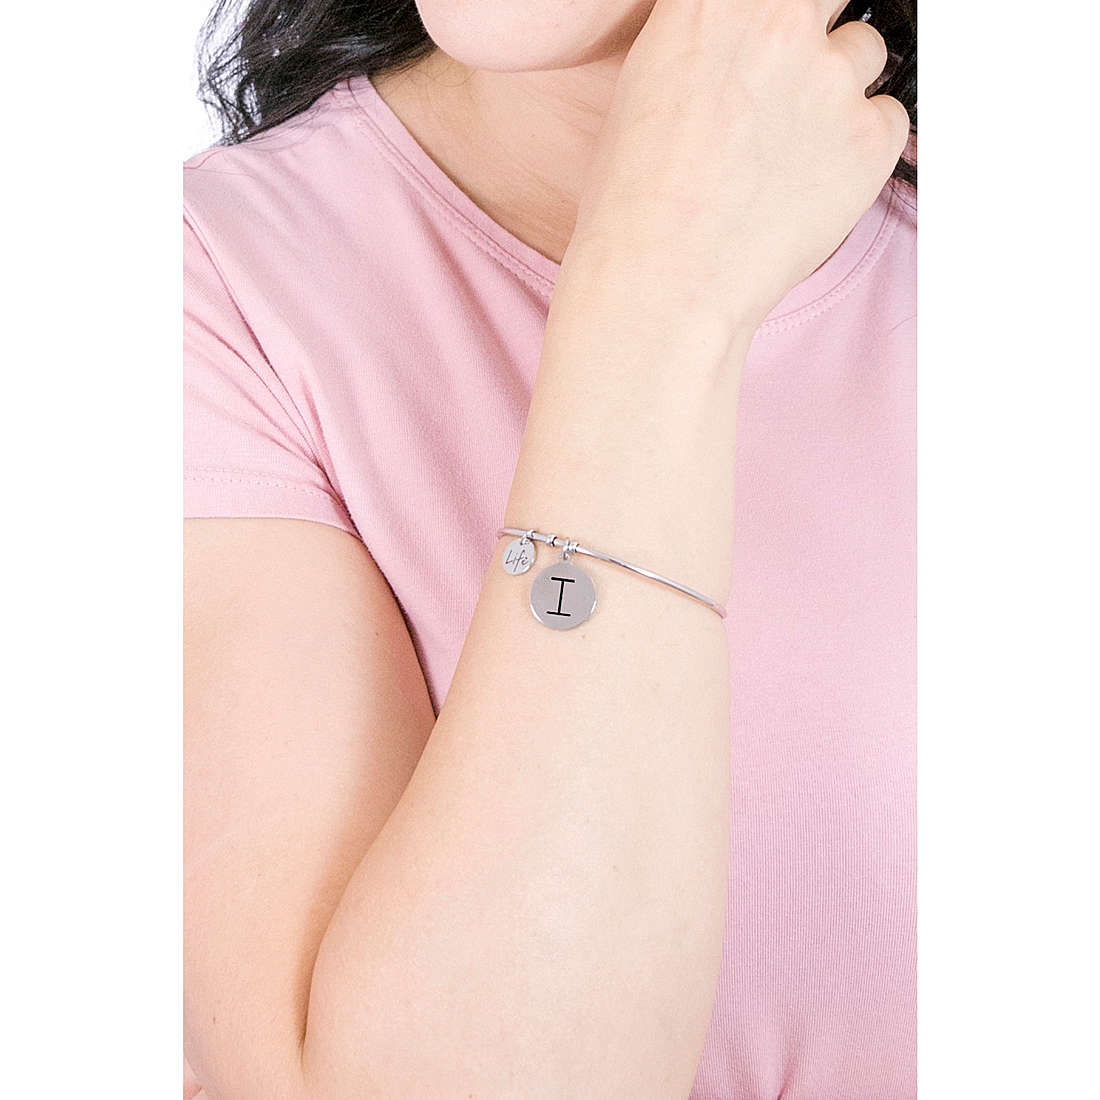 Kidult bracelets Symbols woman 231555i wearing